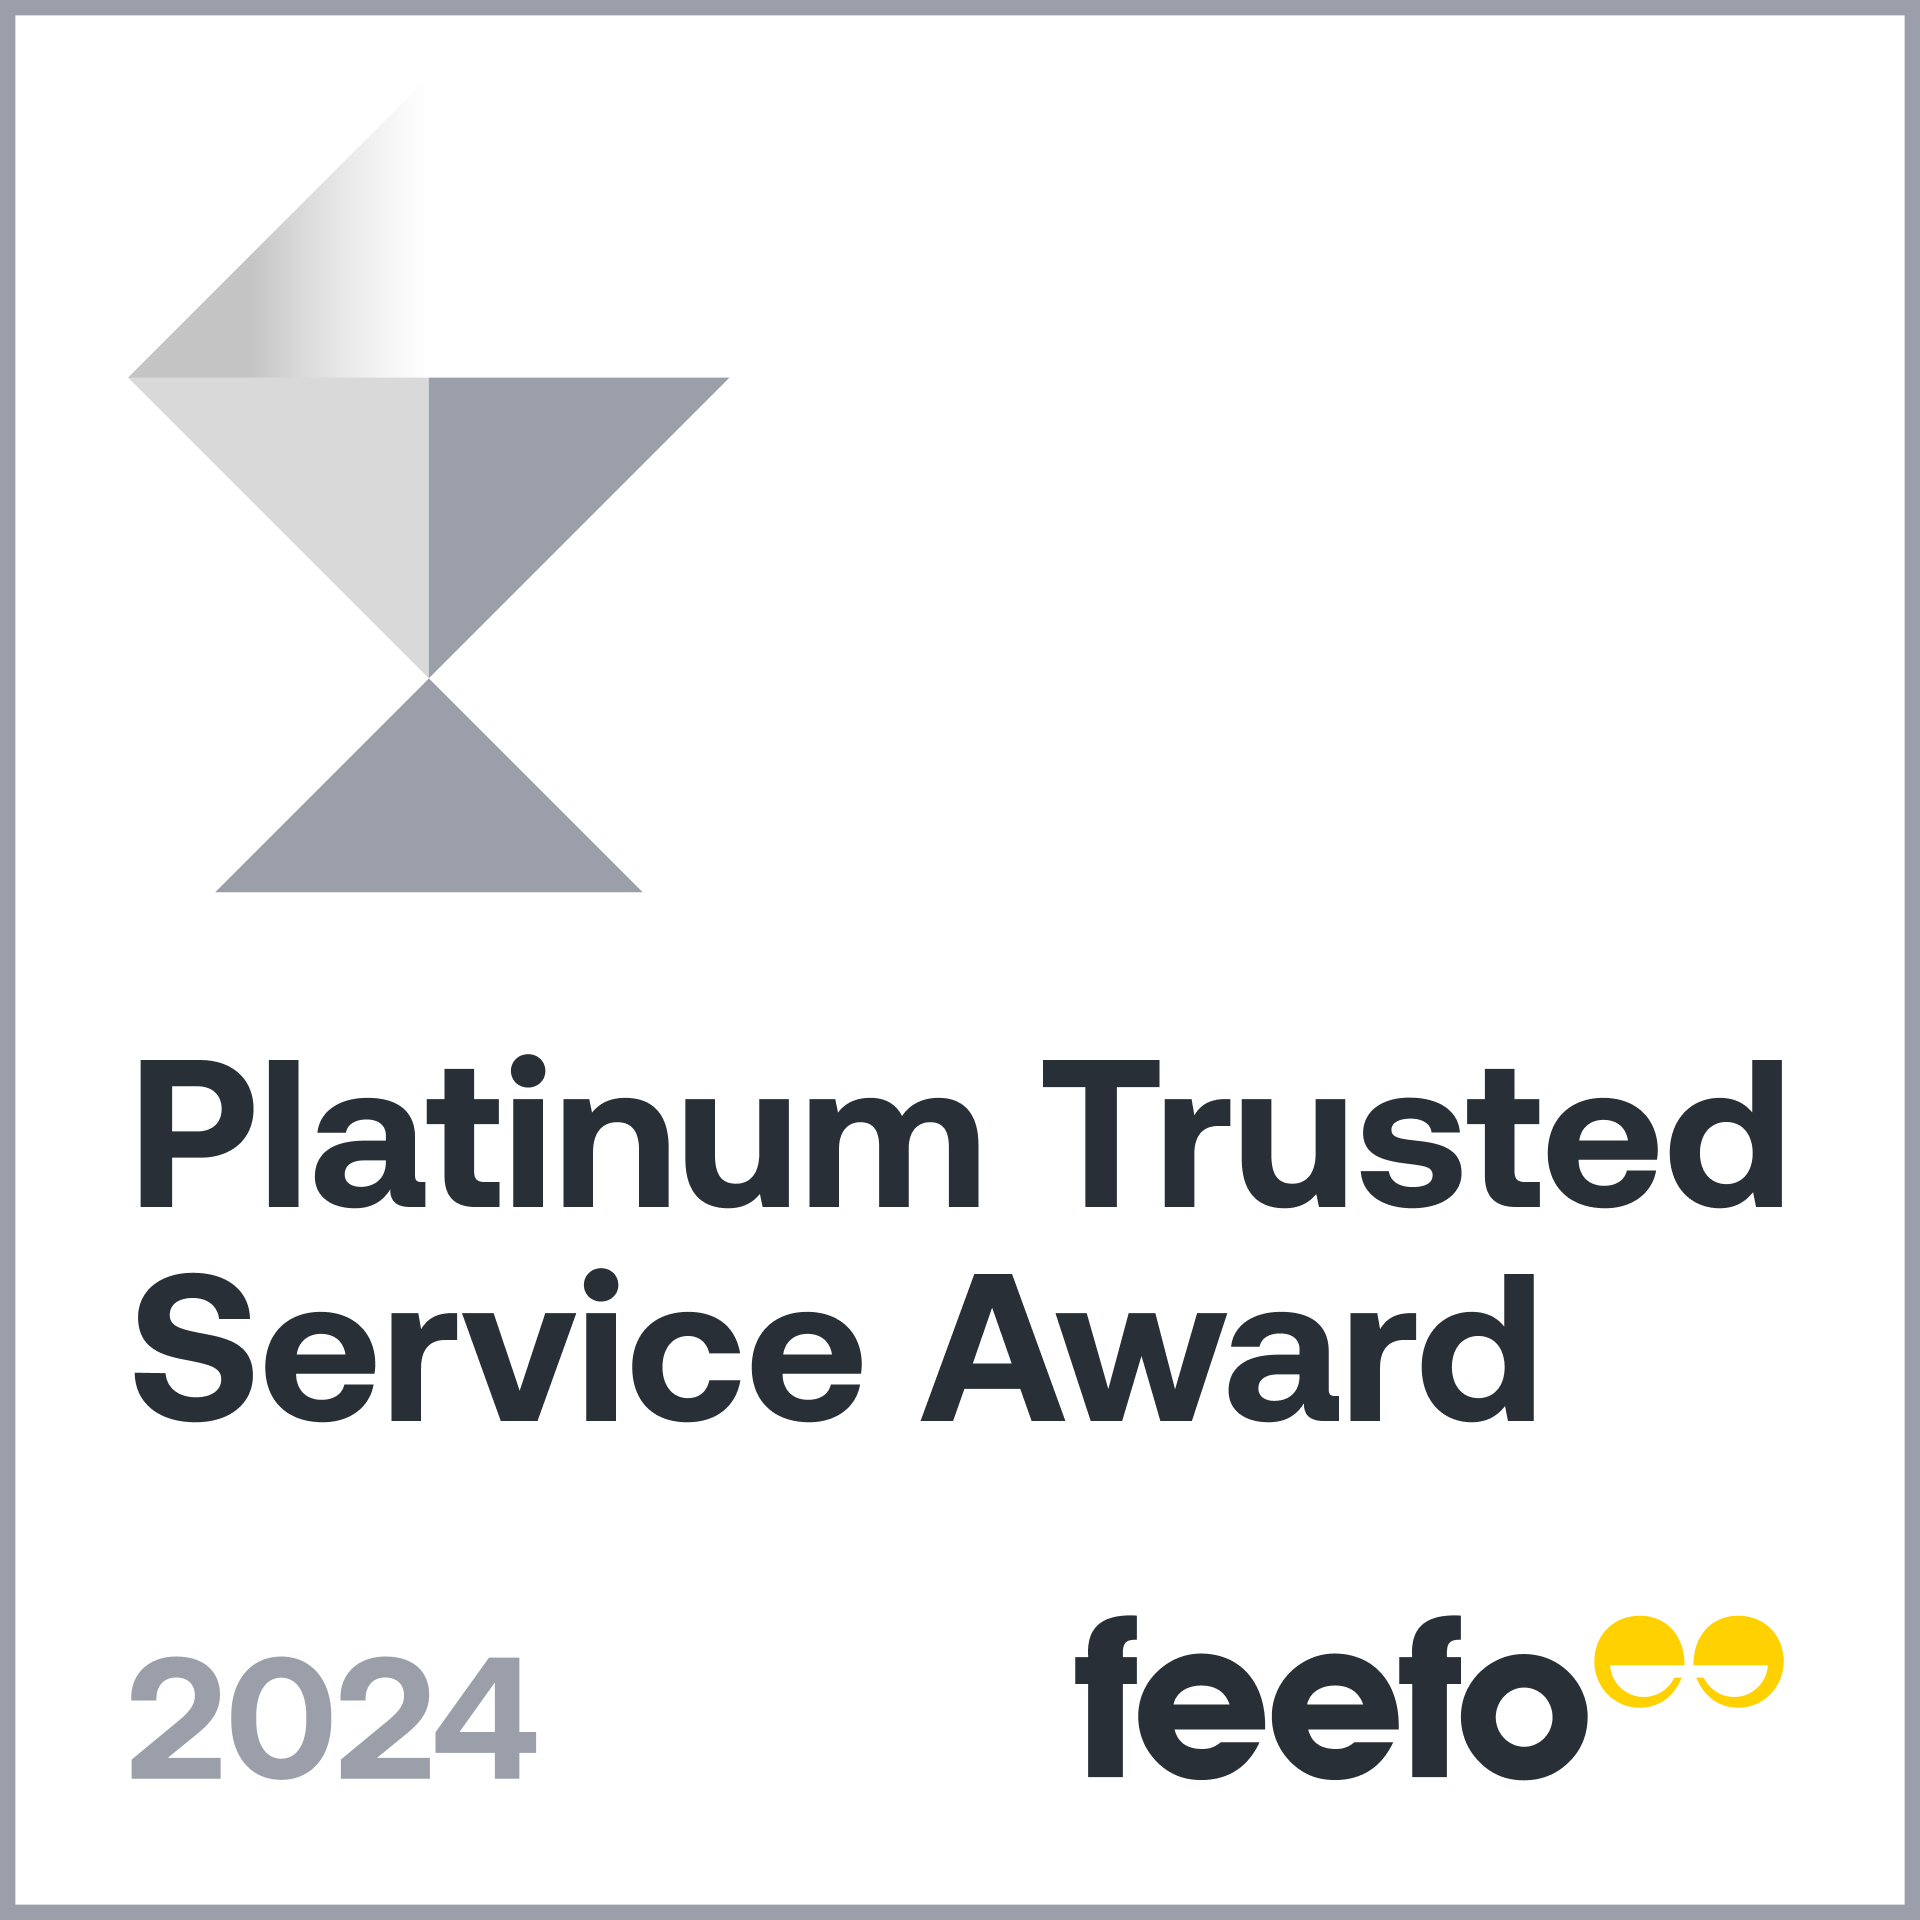 Platinum Trusted Service Award 2024 - Badge - 1x1.png